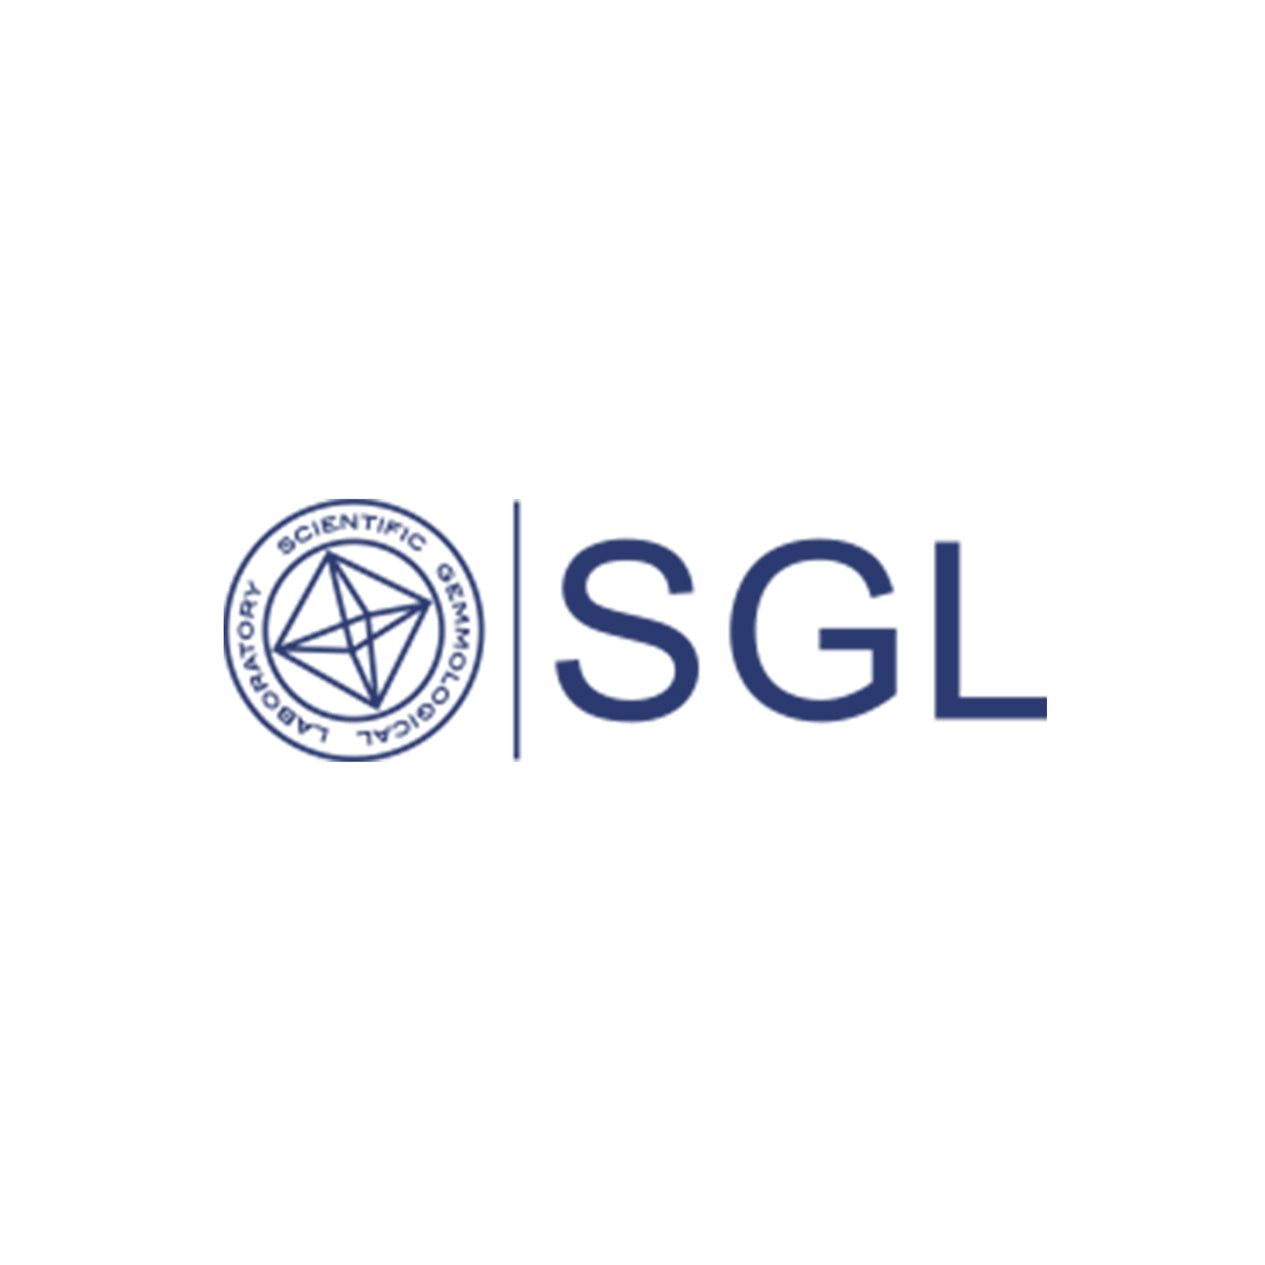 Shimansky Jewellery SGL certification official logo